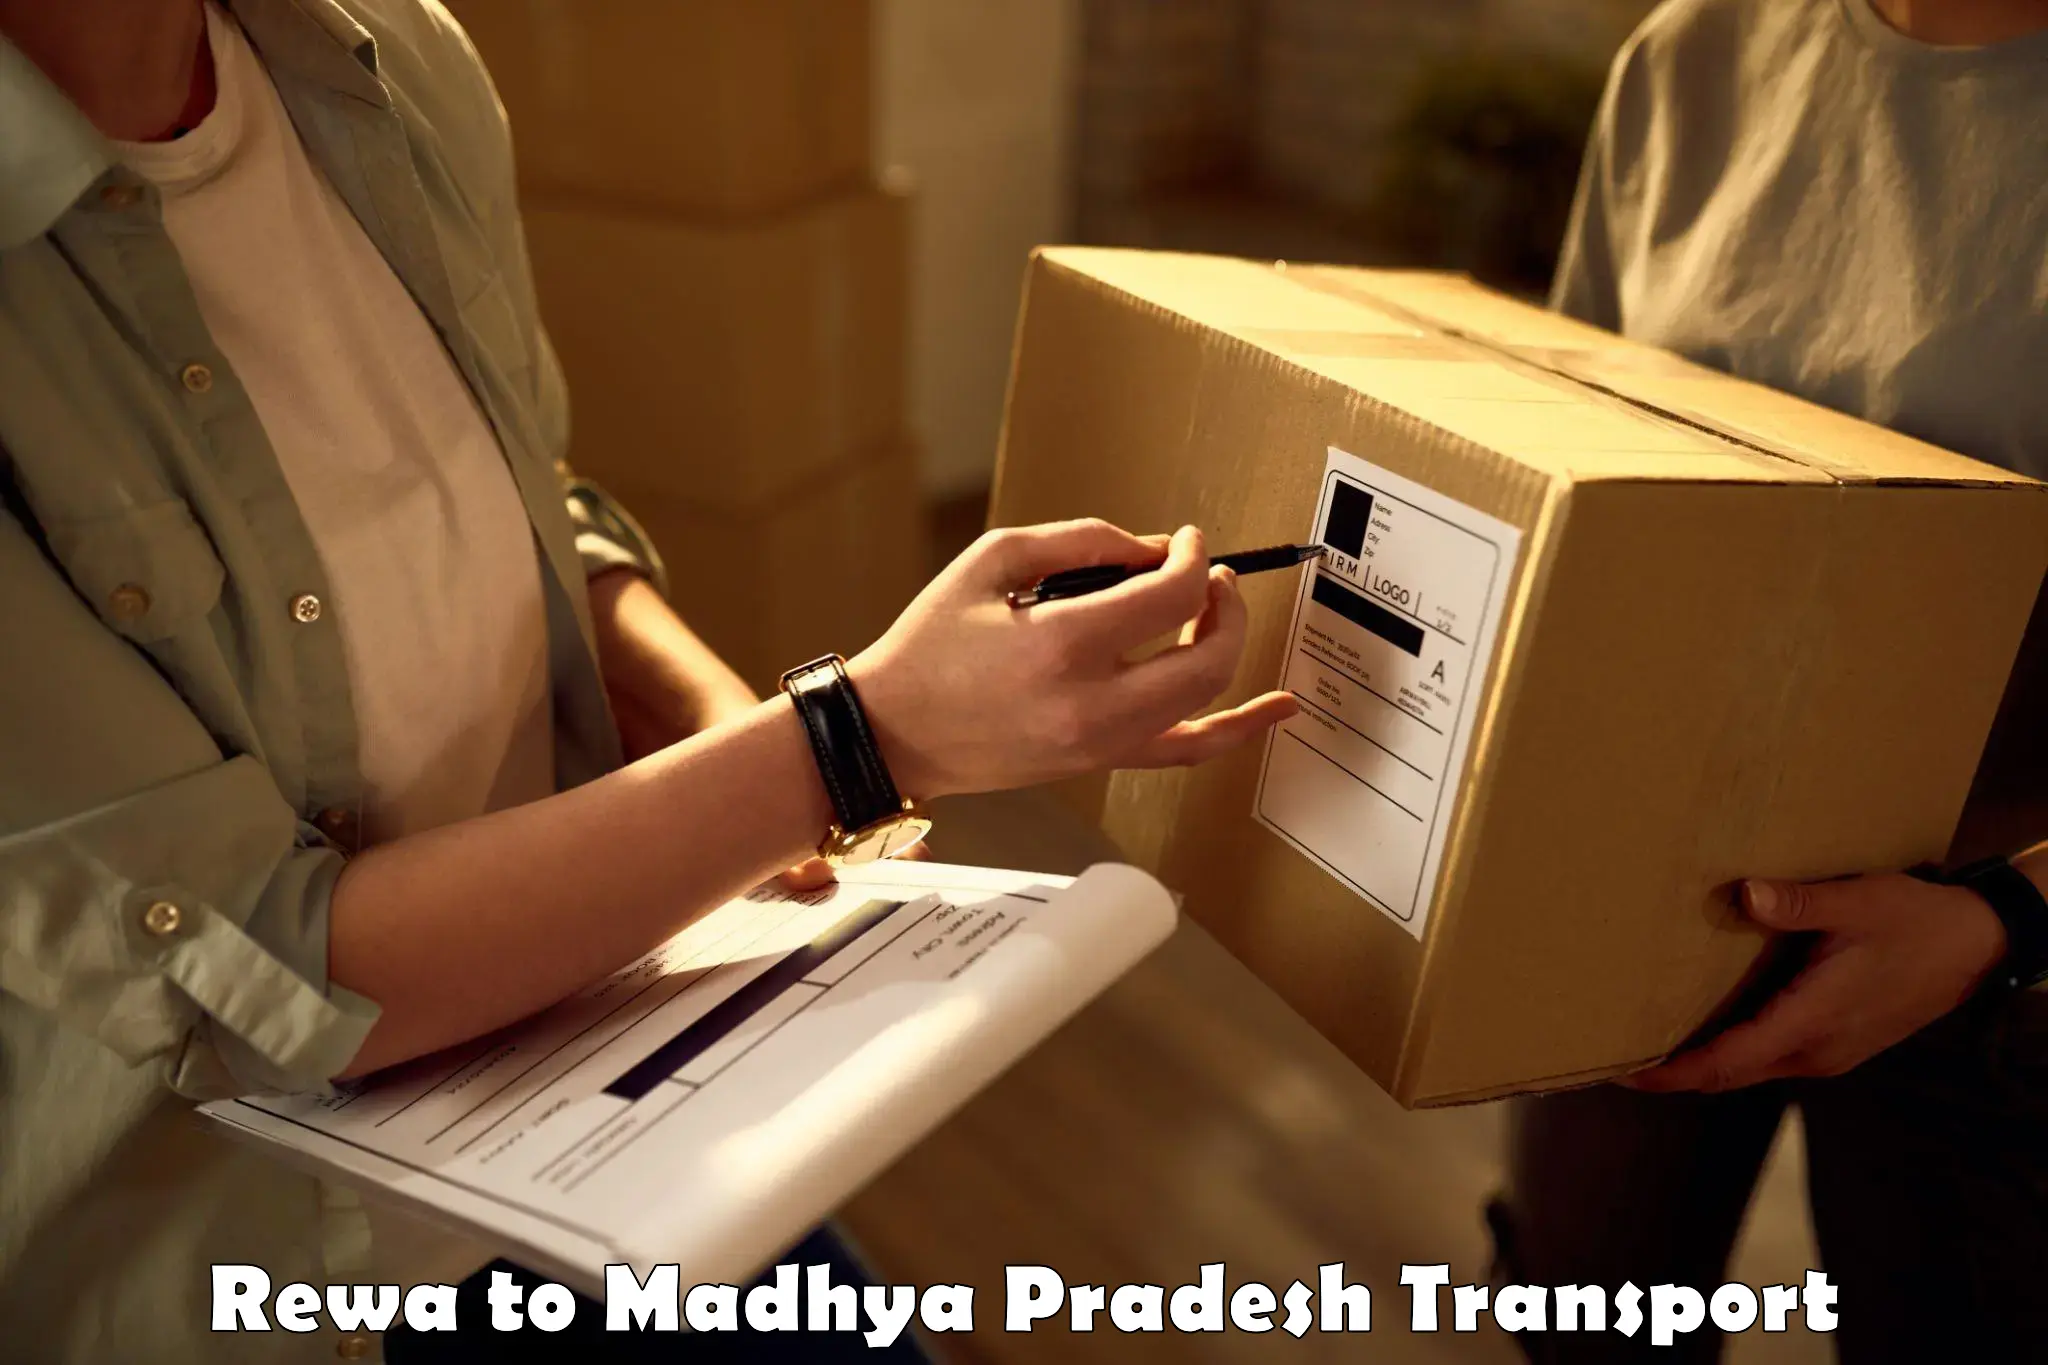 Goods delivery service Rewa to Garh Rewa